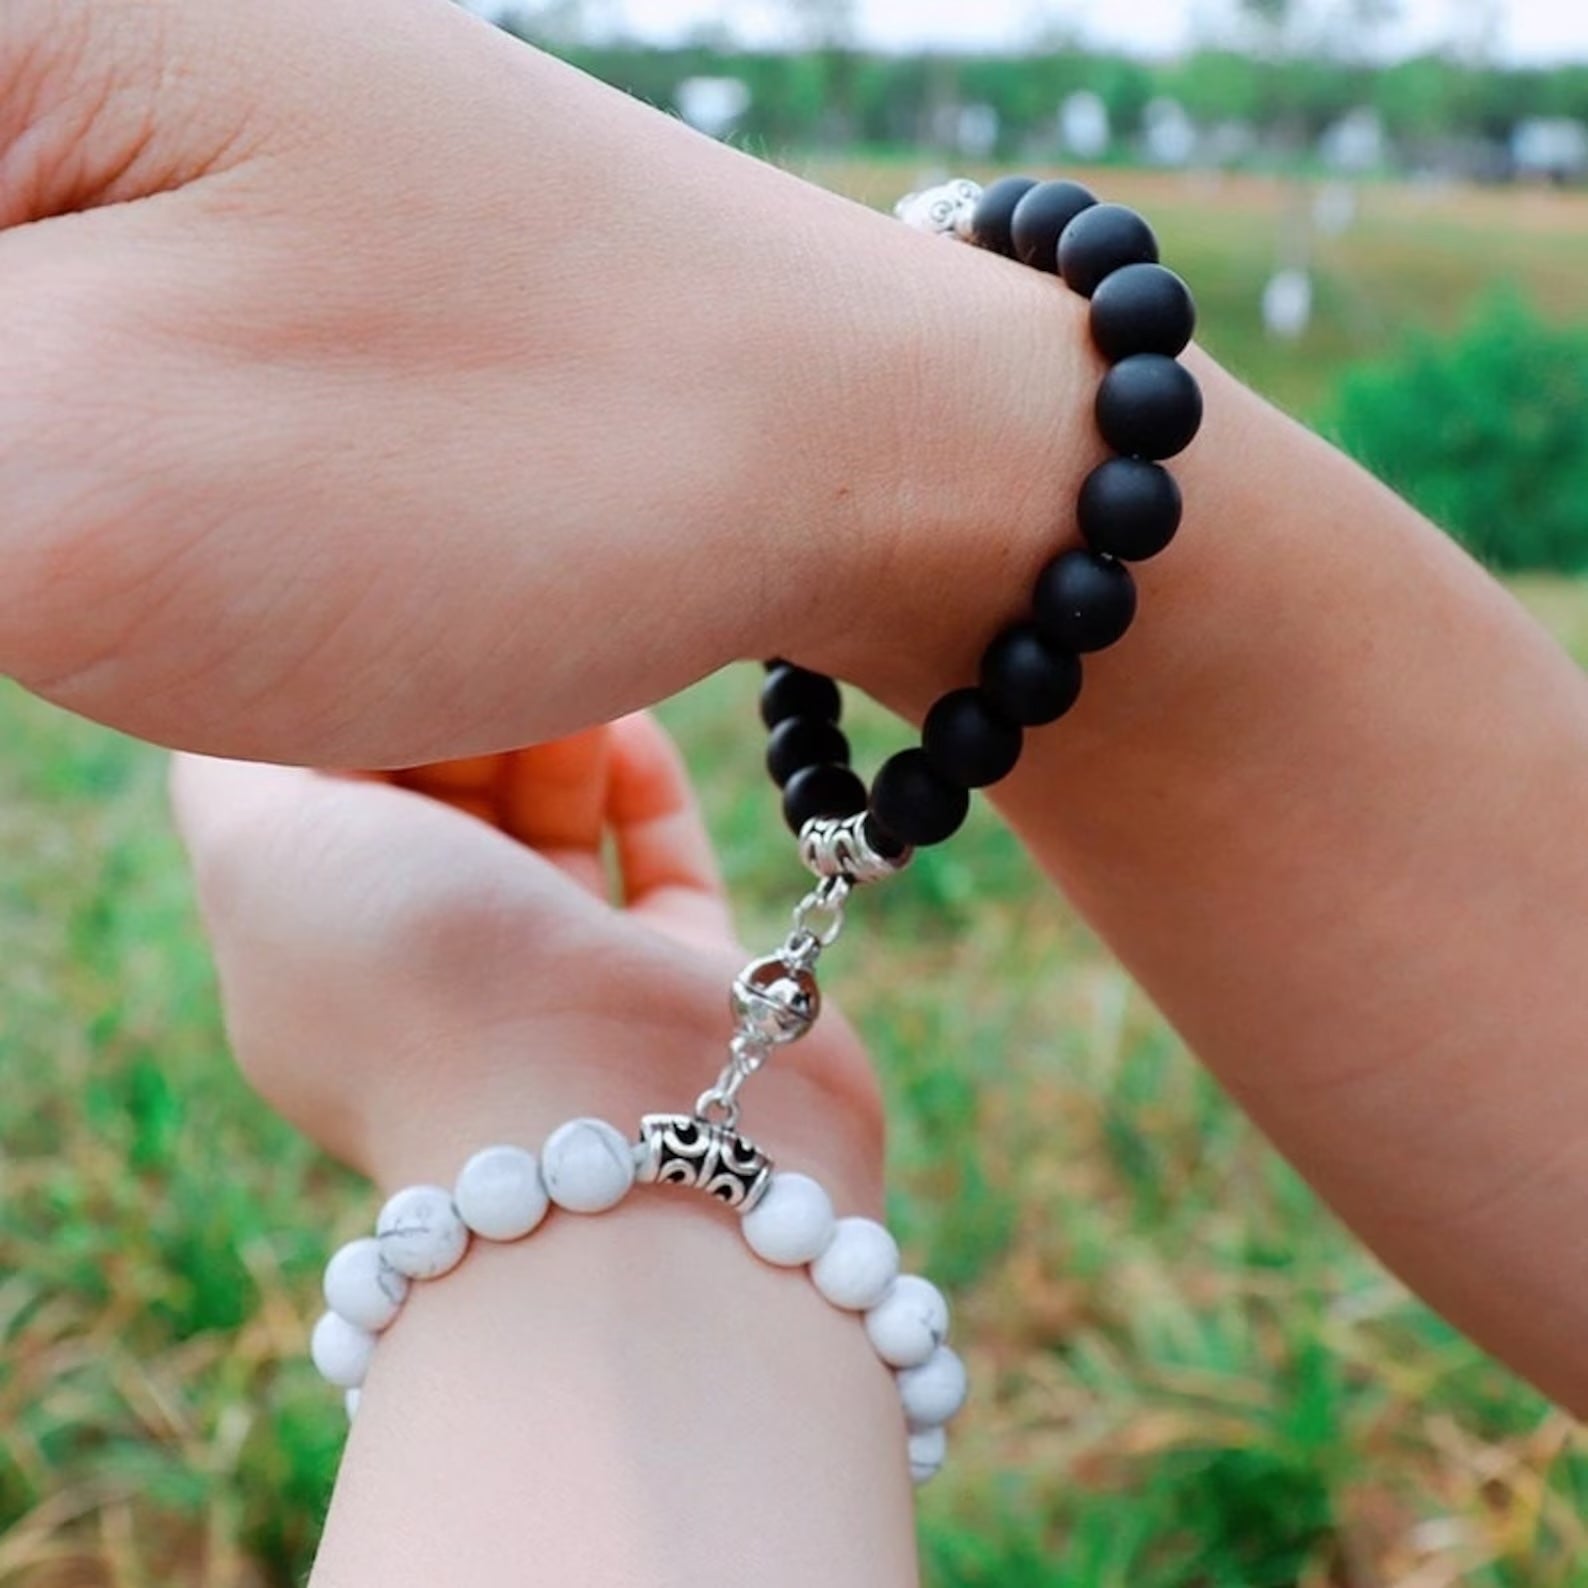 2pcs/Set Natural Stone beads gift for lovers, heart shaped, geometric magnet attraction Couple bracelet, friendship bracelet.